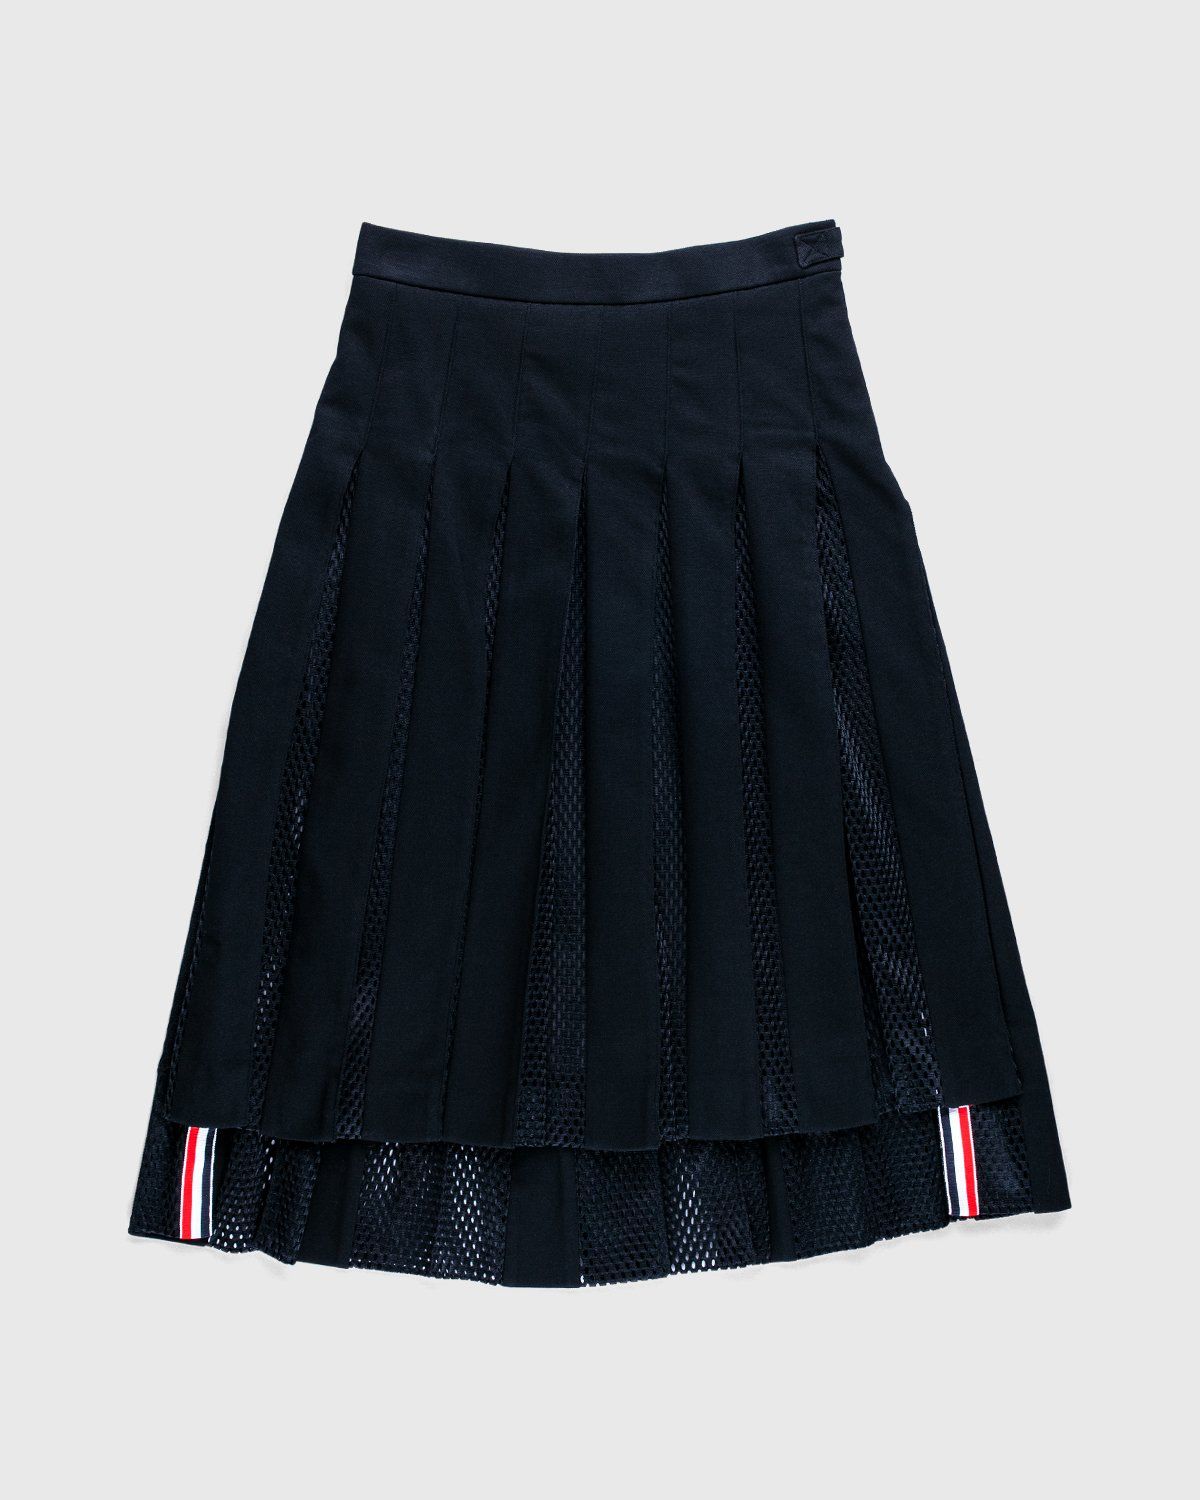 Thom Browne x Highsnobiety – Men's Pleated Mesh Skirt Black - Midi - Black - Image 1